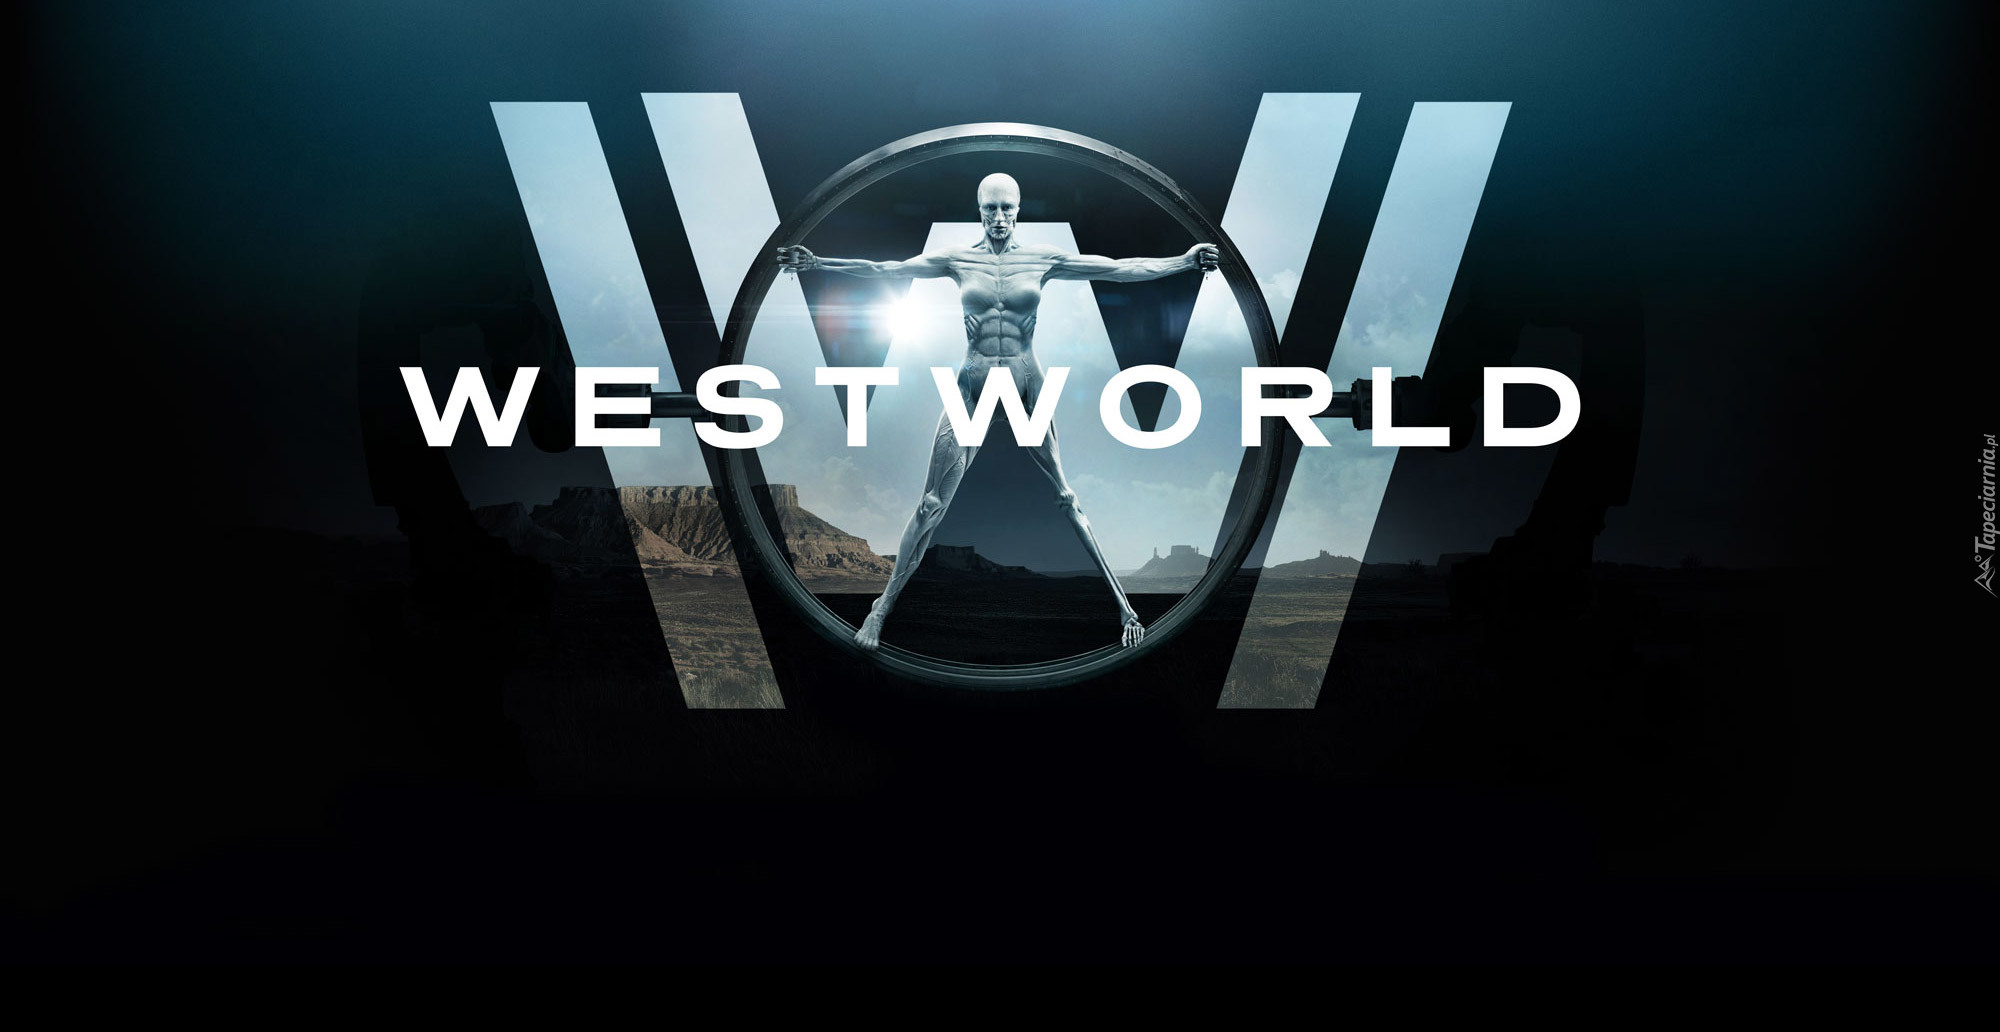 Westworld, Serial, Plakat